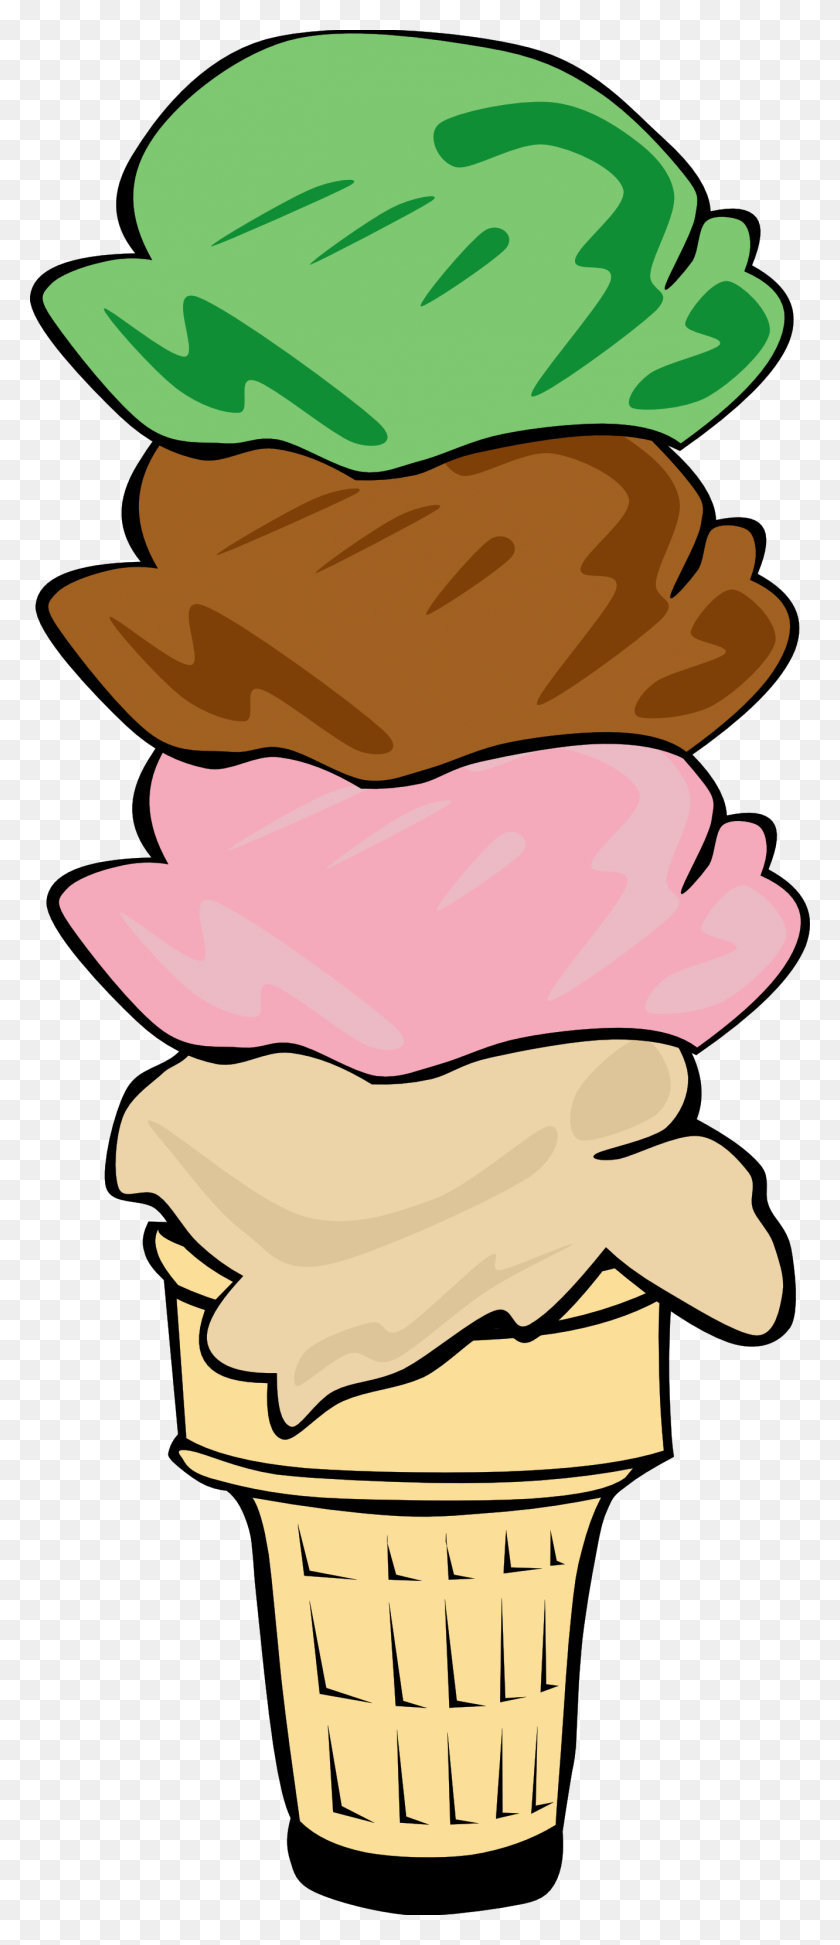 1331x3217 Ice Cream Social Clip Art - Ice Cream Social Clip Art